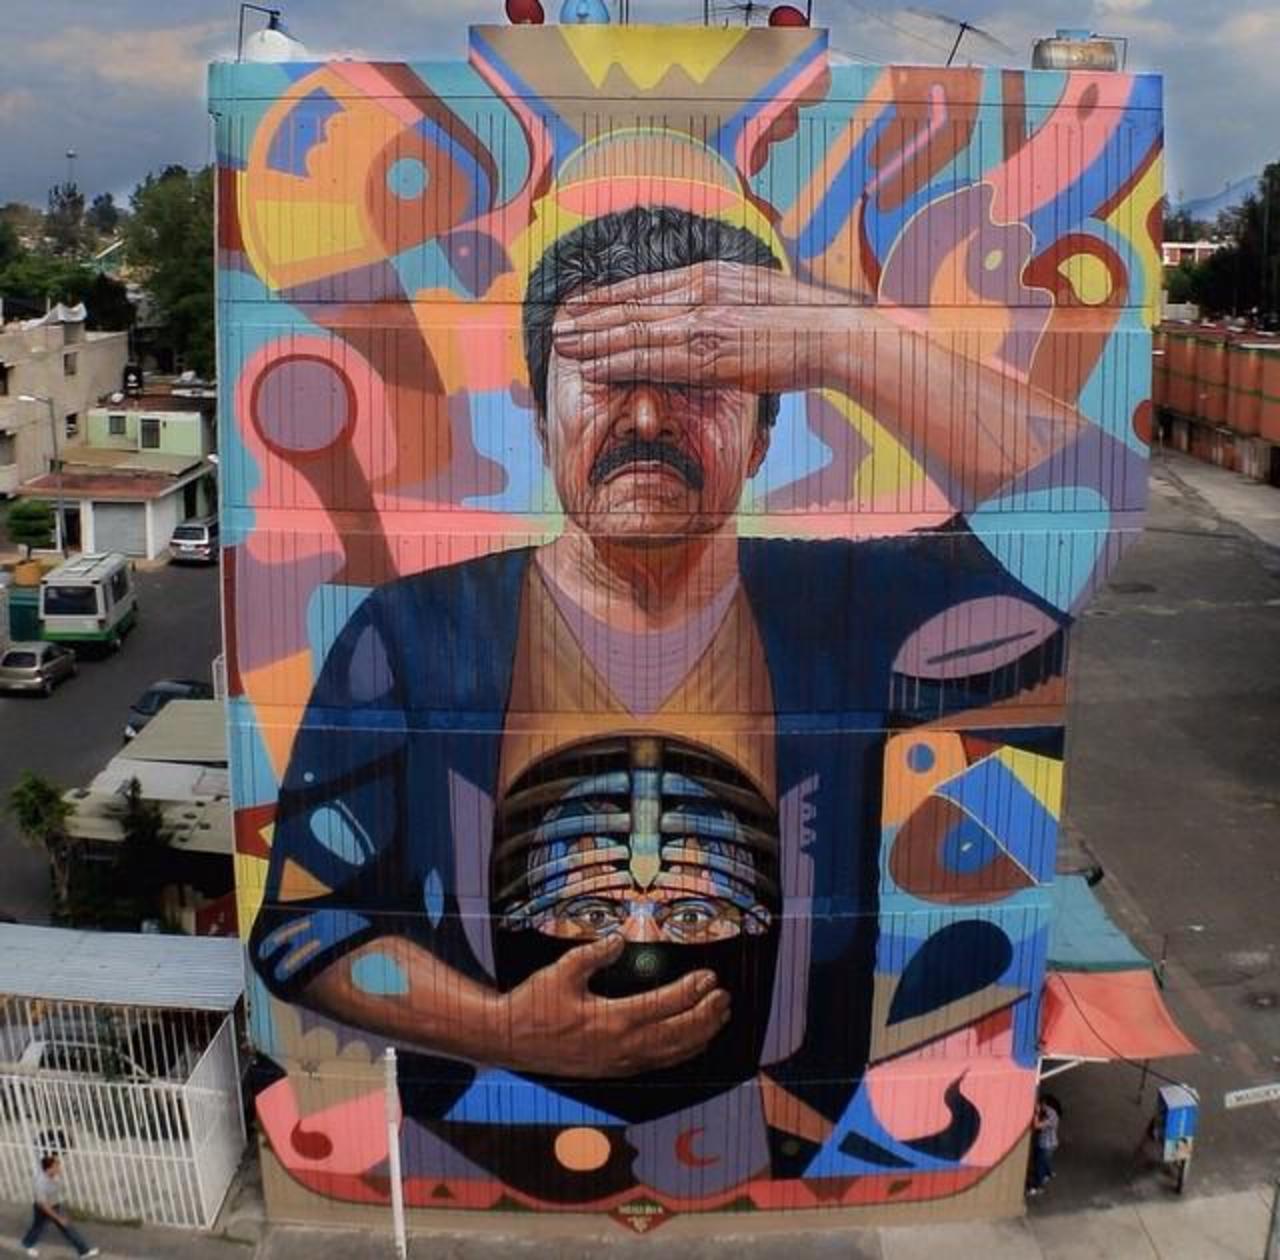 Large scale Street Art by the artist Daniel Cortez 

#art #mural #graffiti #streetart http://t.co/Kn4QmB3WYA